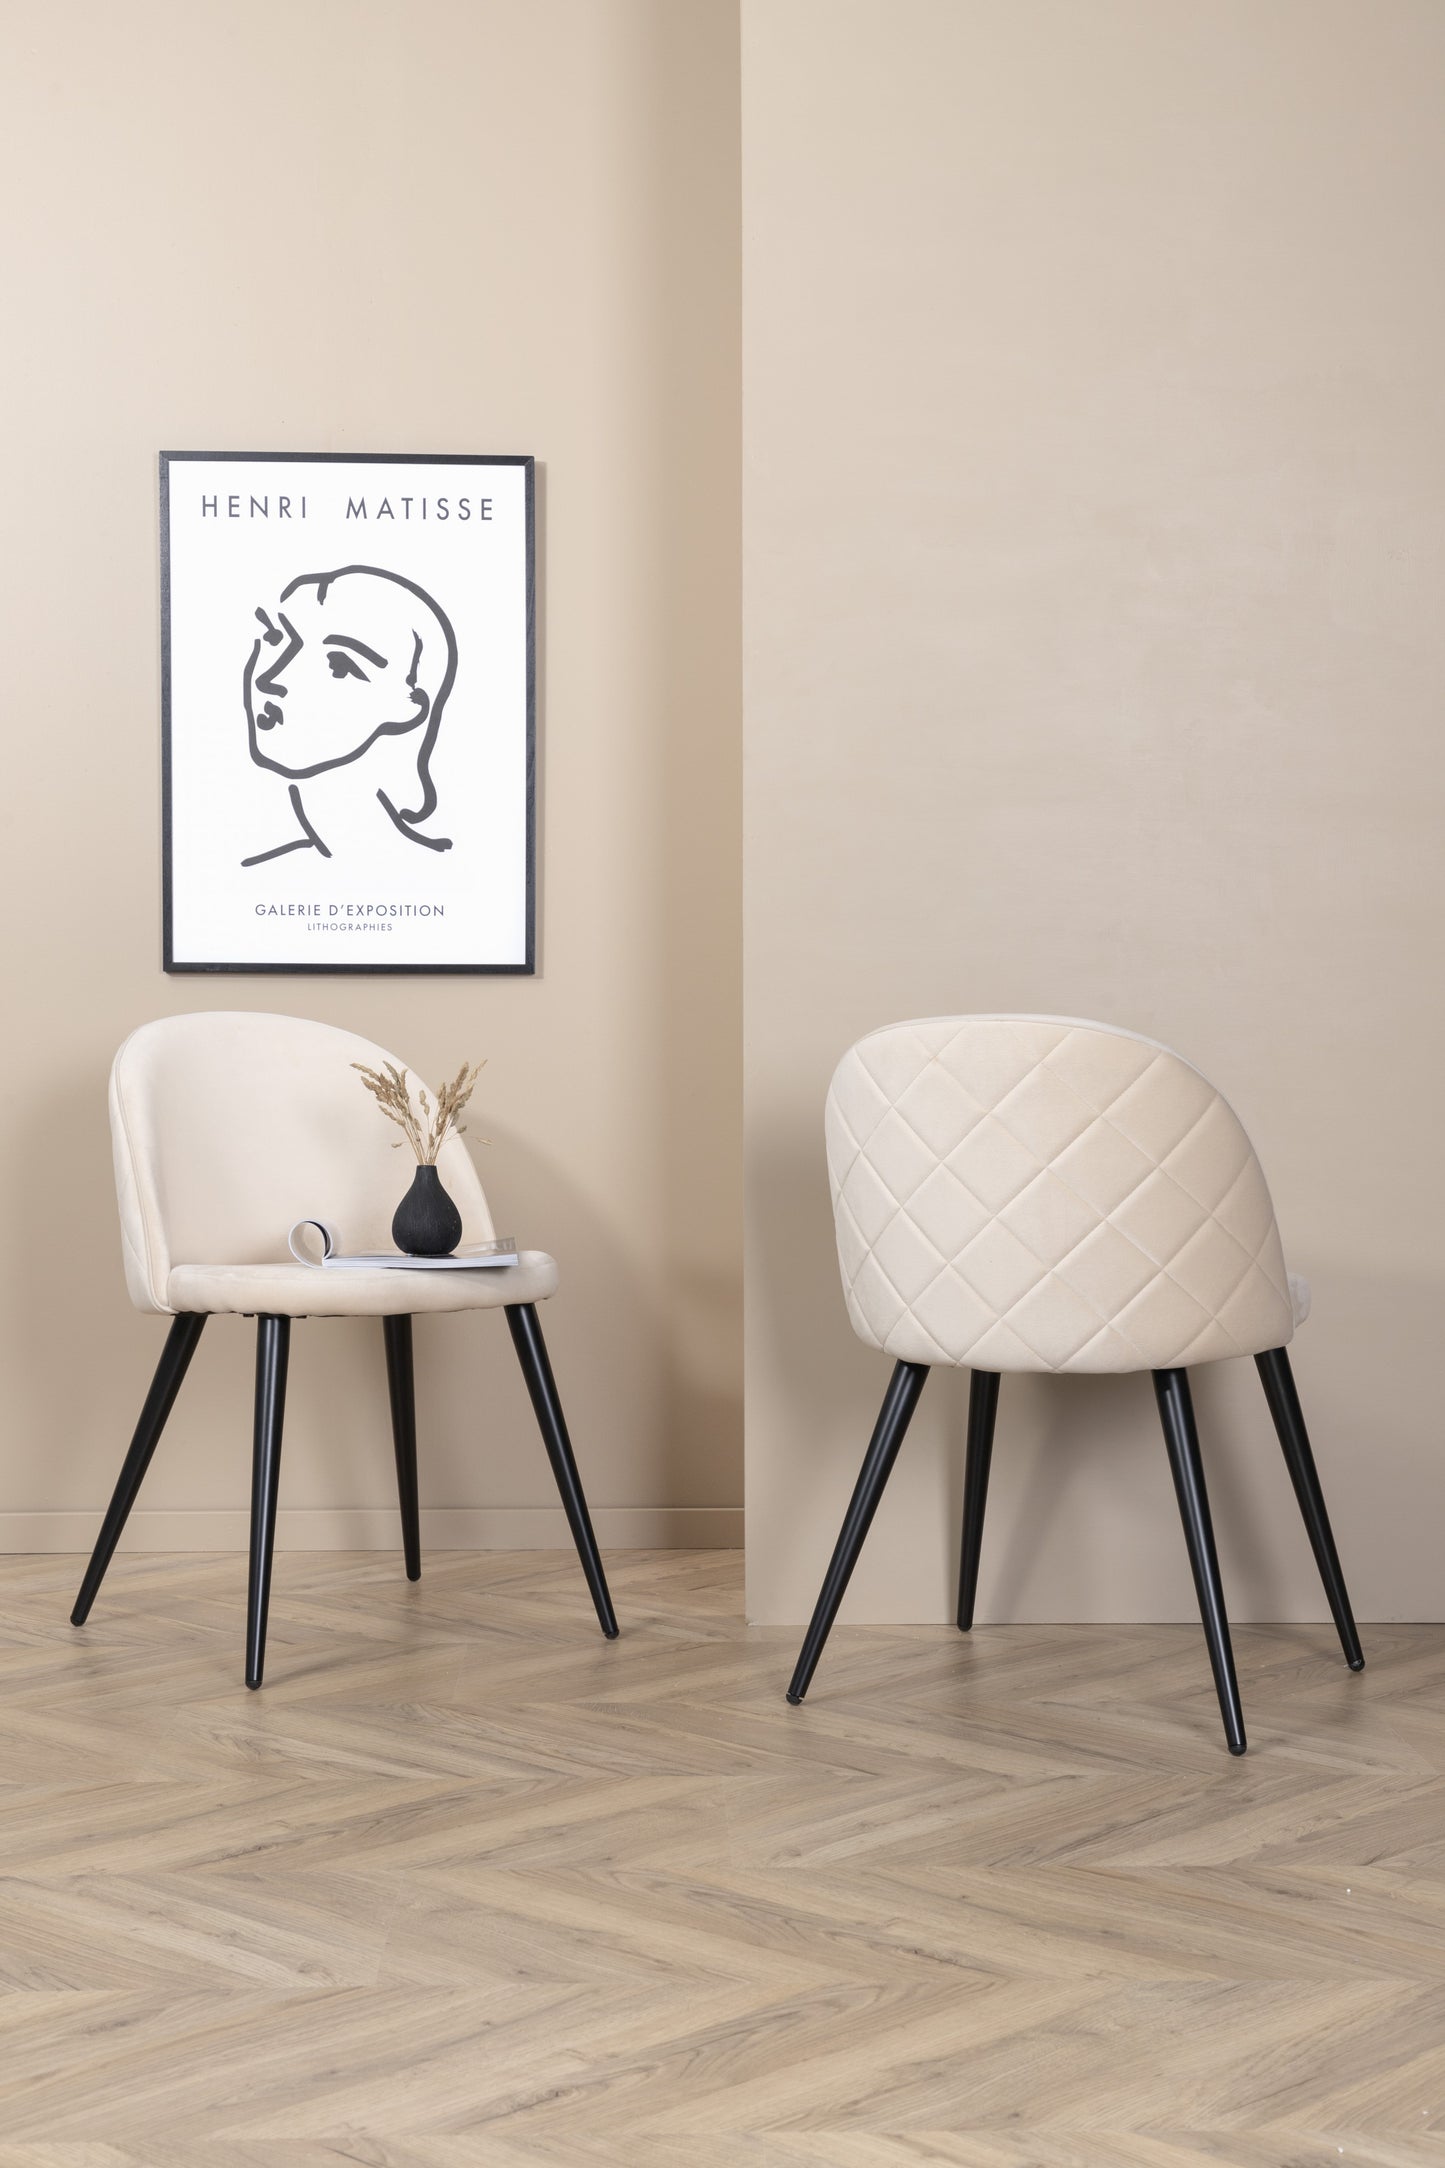 Venture-Design | Velvet - Stuhl mit Nähten - Schwarz / Beige Velours